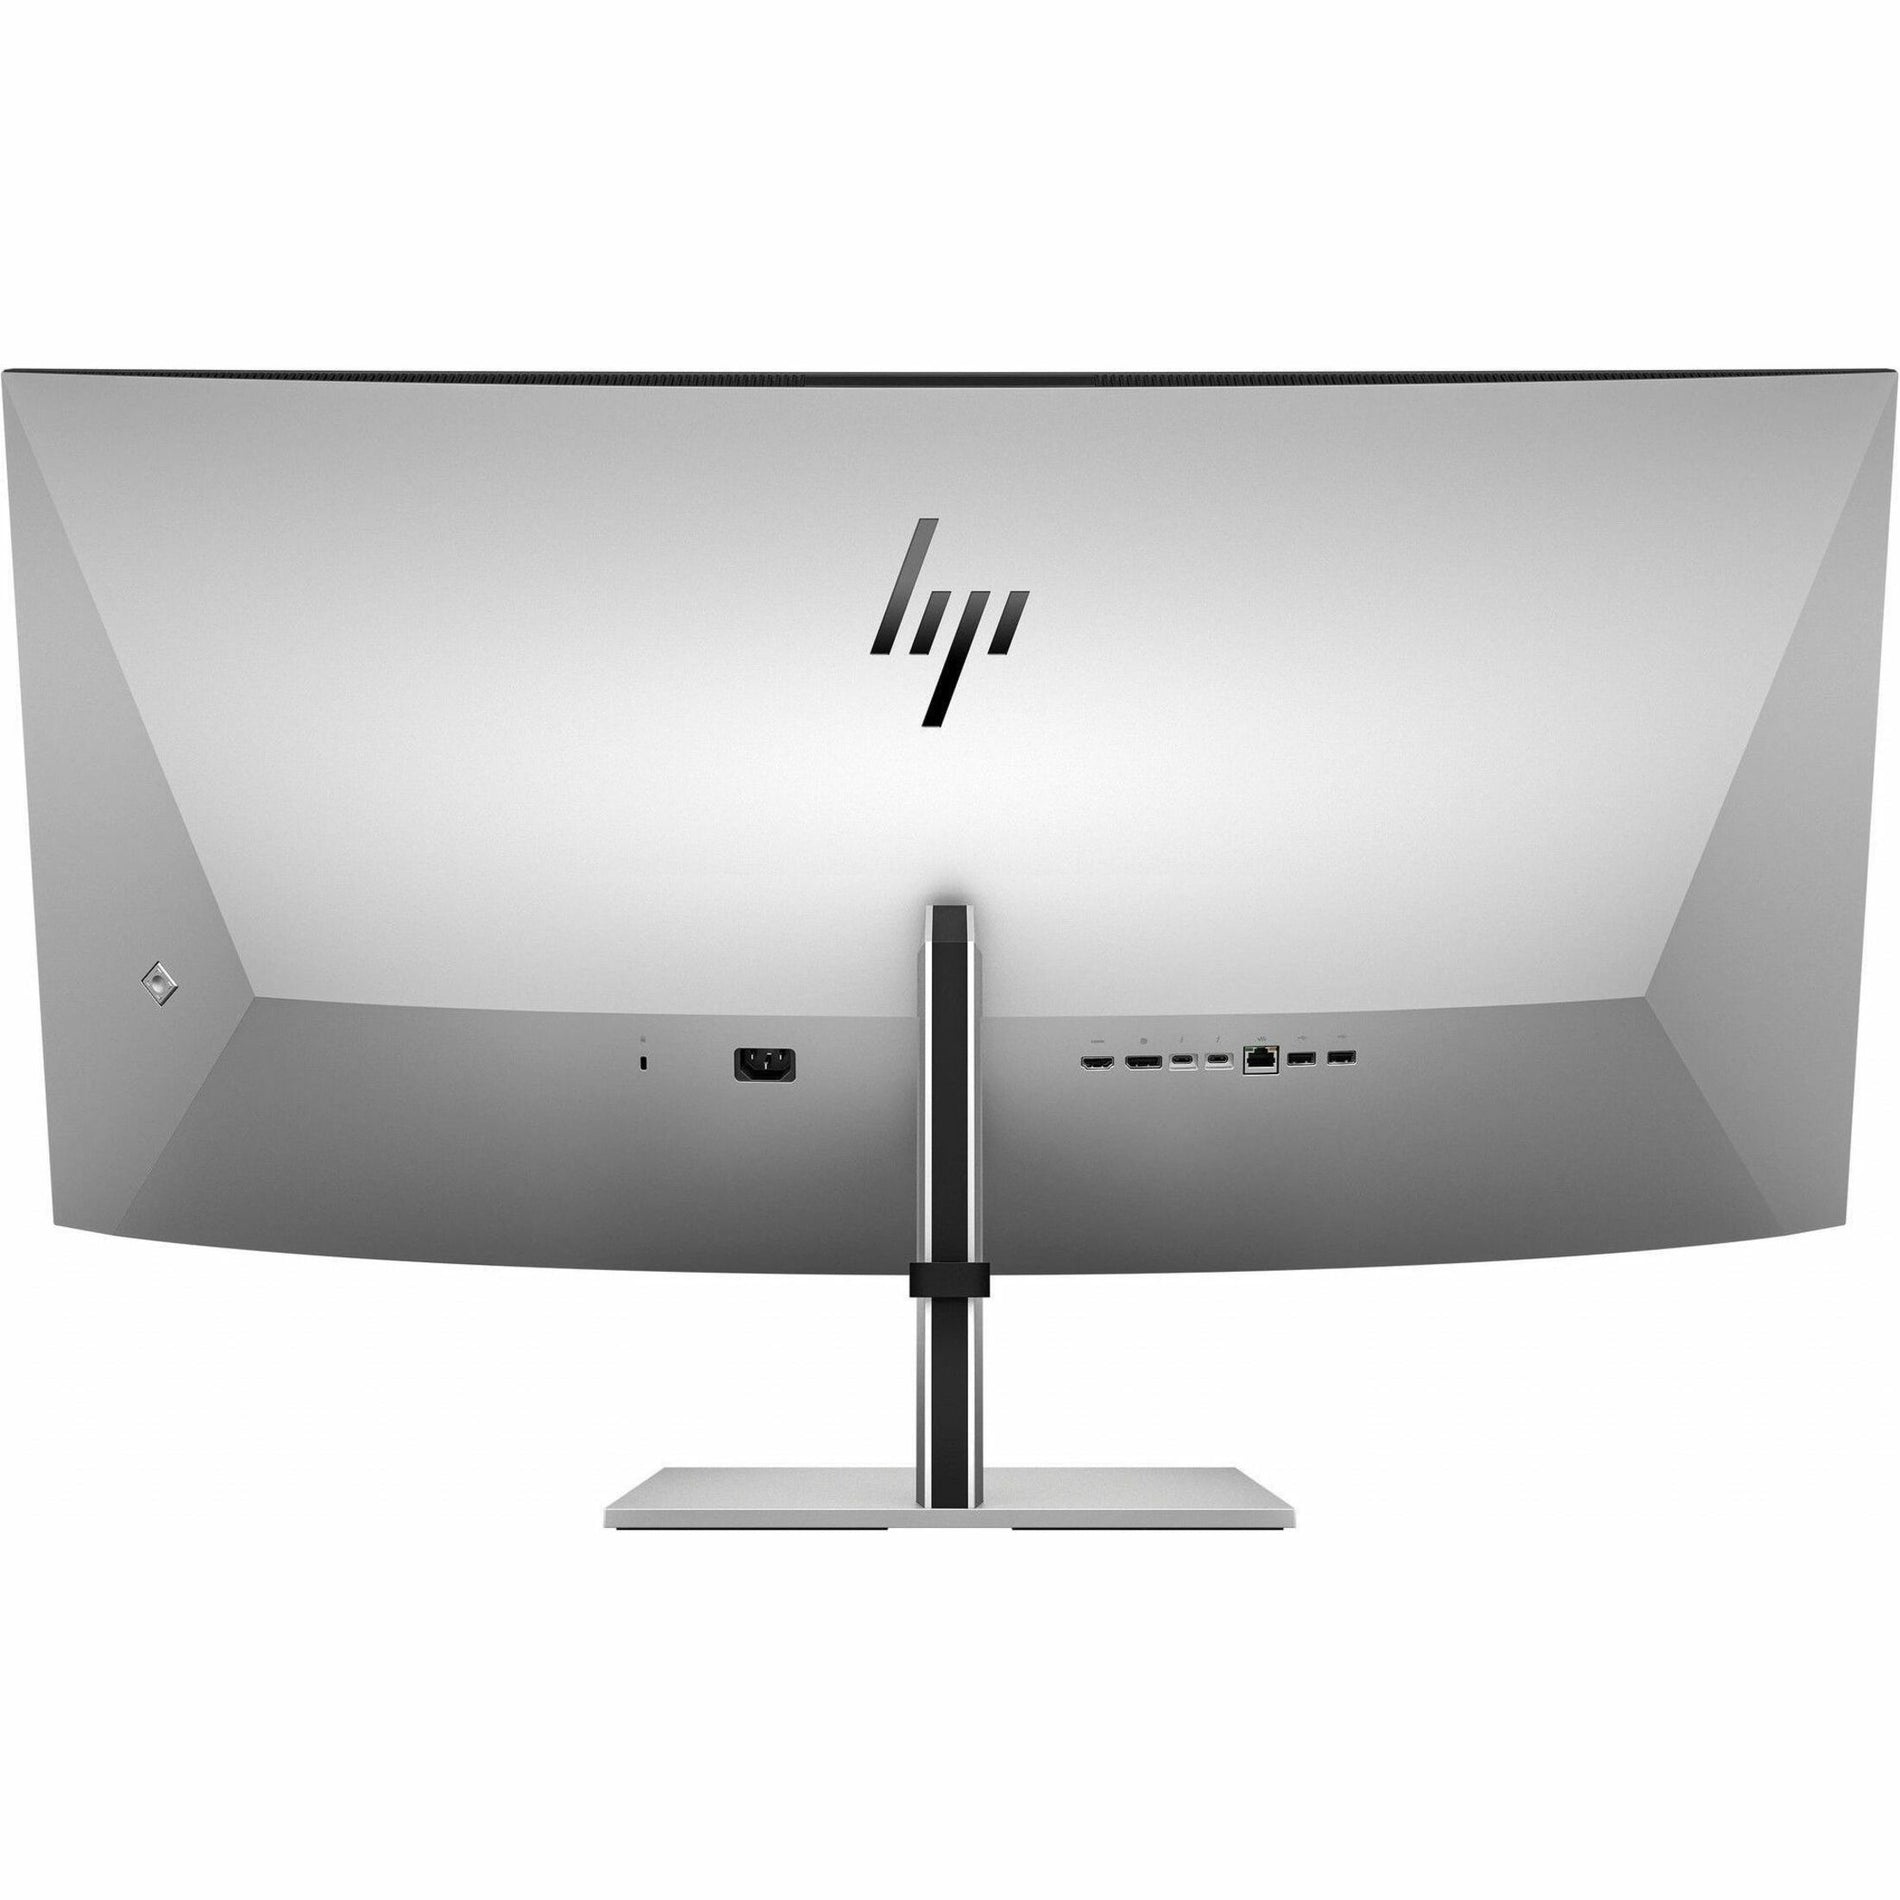 HP 740pm 40" Class Webcam 5K2K WUHD Curved Screen LED Monitor - 21:9 - Black, Silver (8Y2R2AA#ABA)